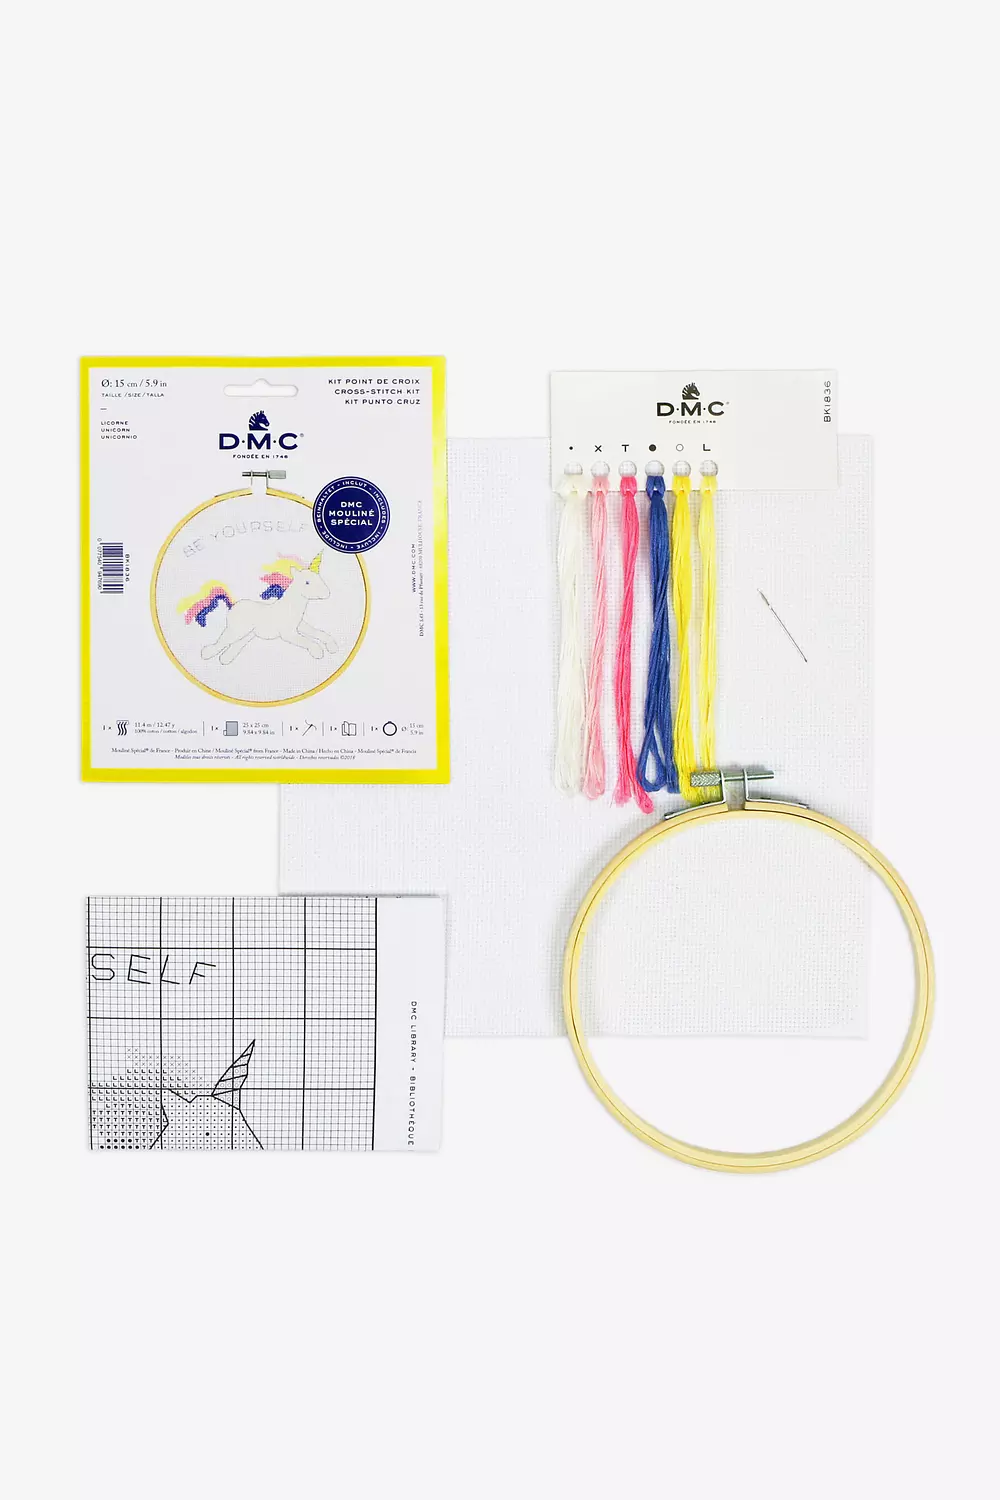 Magic Unicorn Cross Stitch Kit for Beginners Counted Pattern DIY